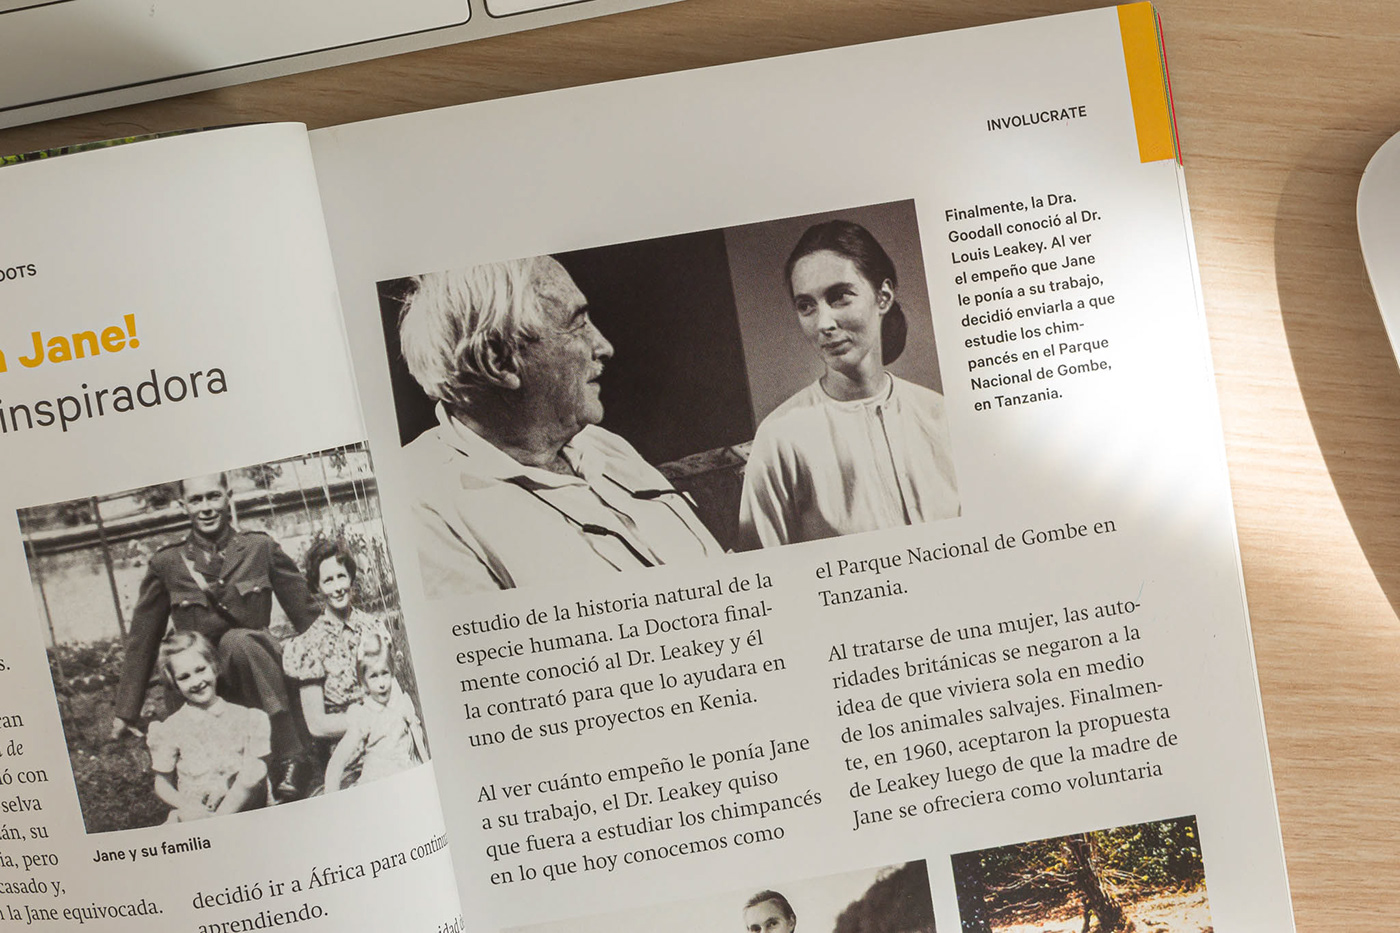 Jane Goodall argentina toolkit guia